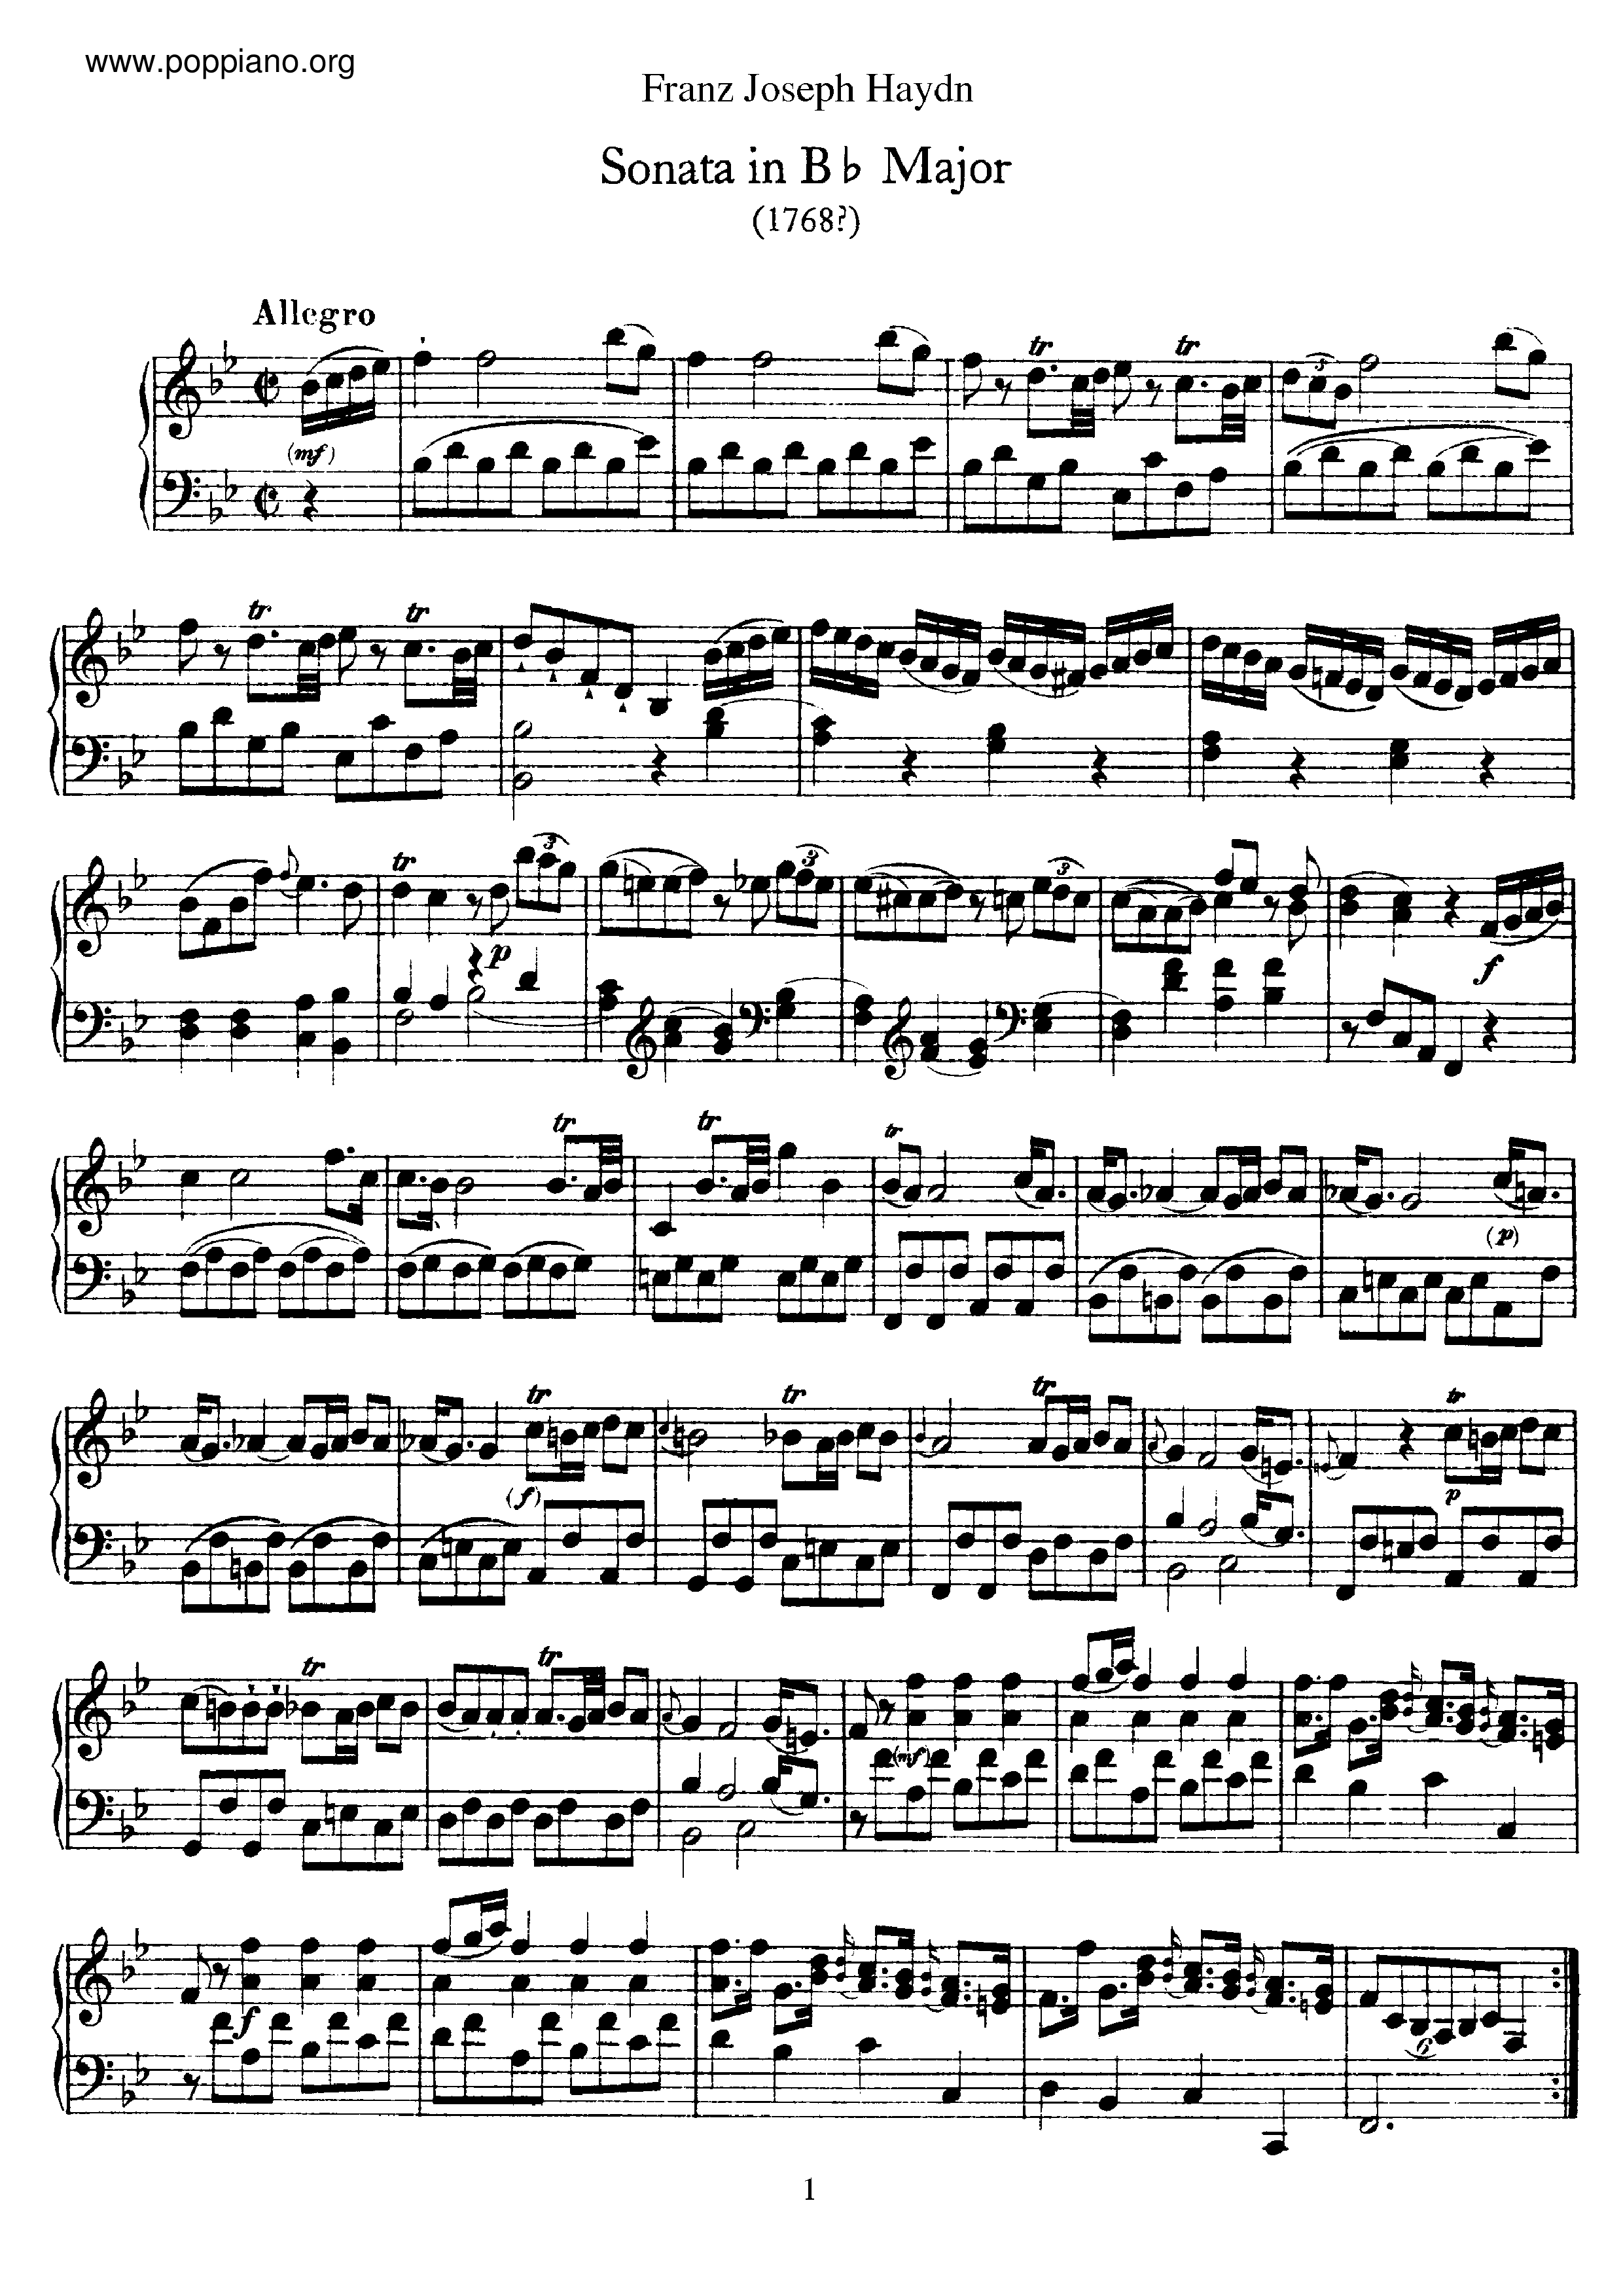 Sonata No.17 in B flat majorピアノ譜